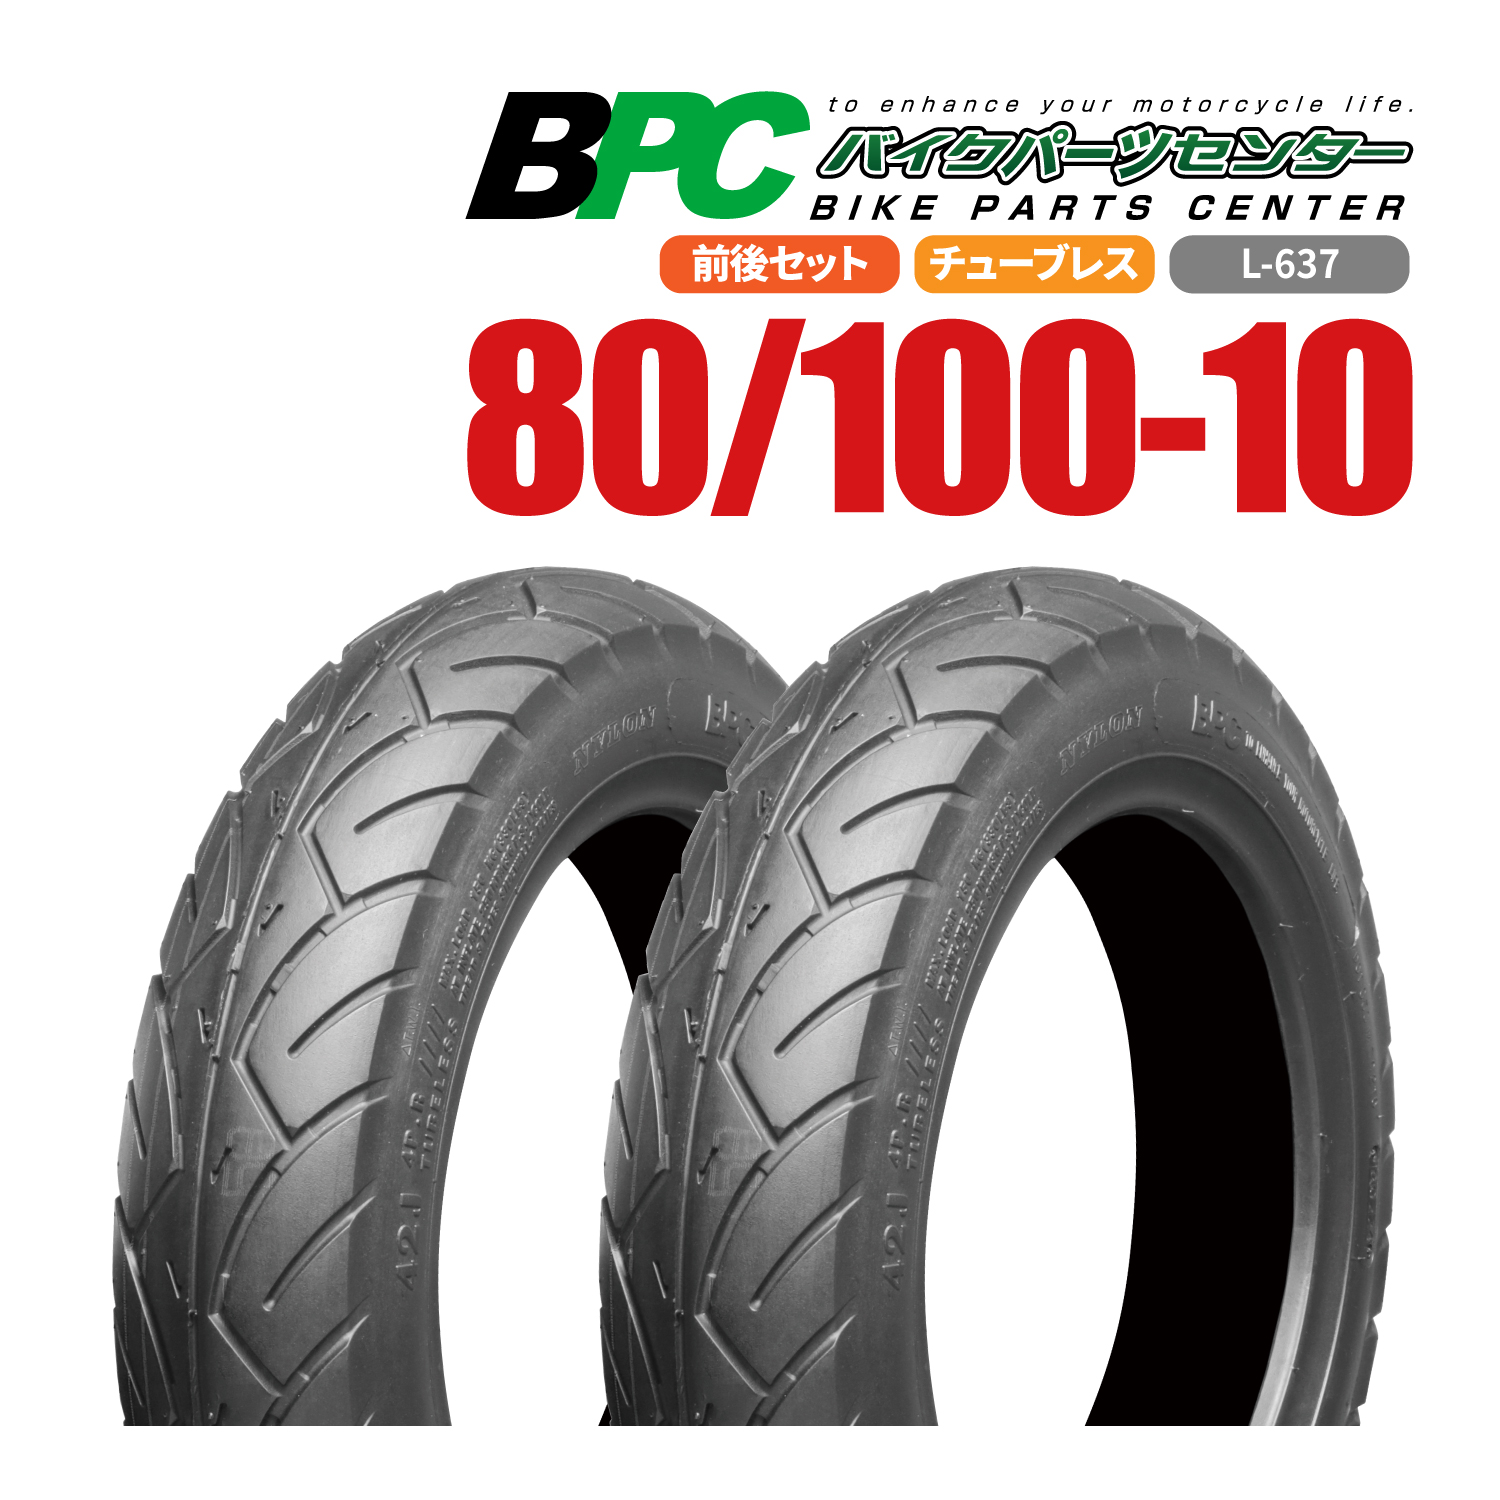 80/100-10 TL L-637 BPC tire bike motorcycle tire 10 -inch high quality re-arrival 2 pcs set 